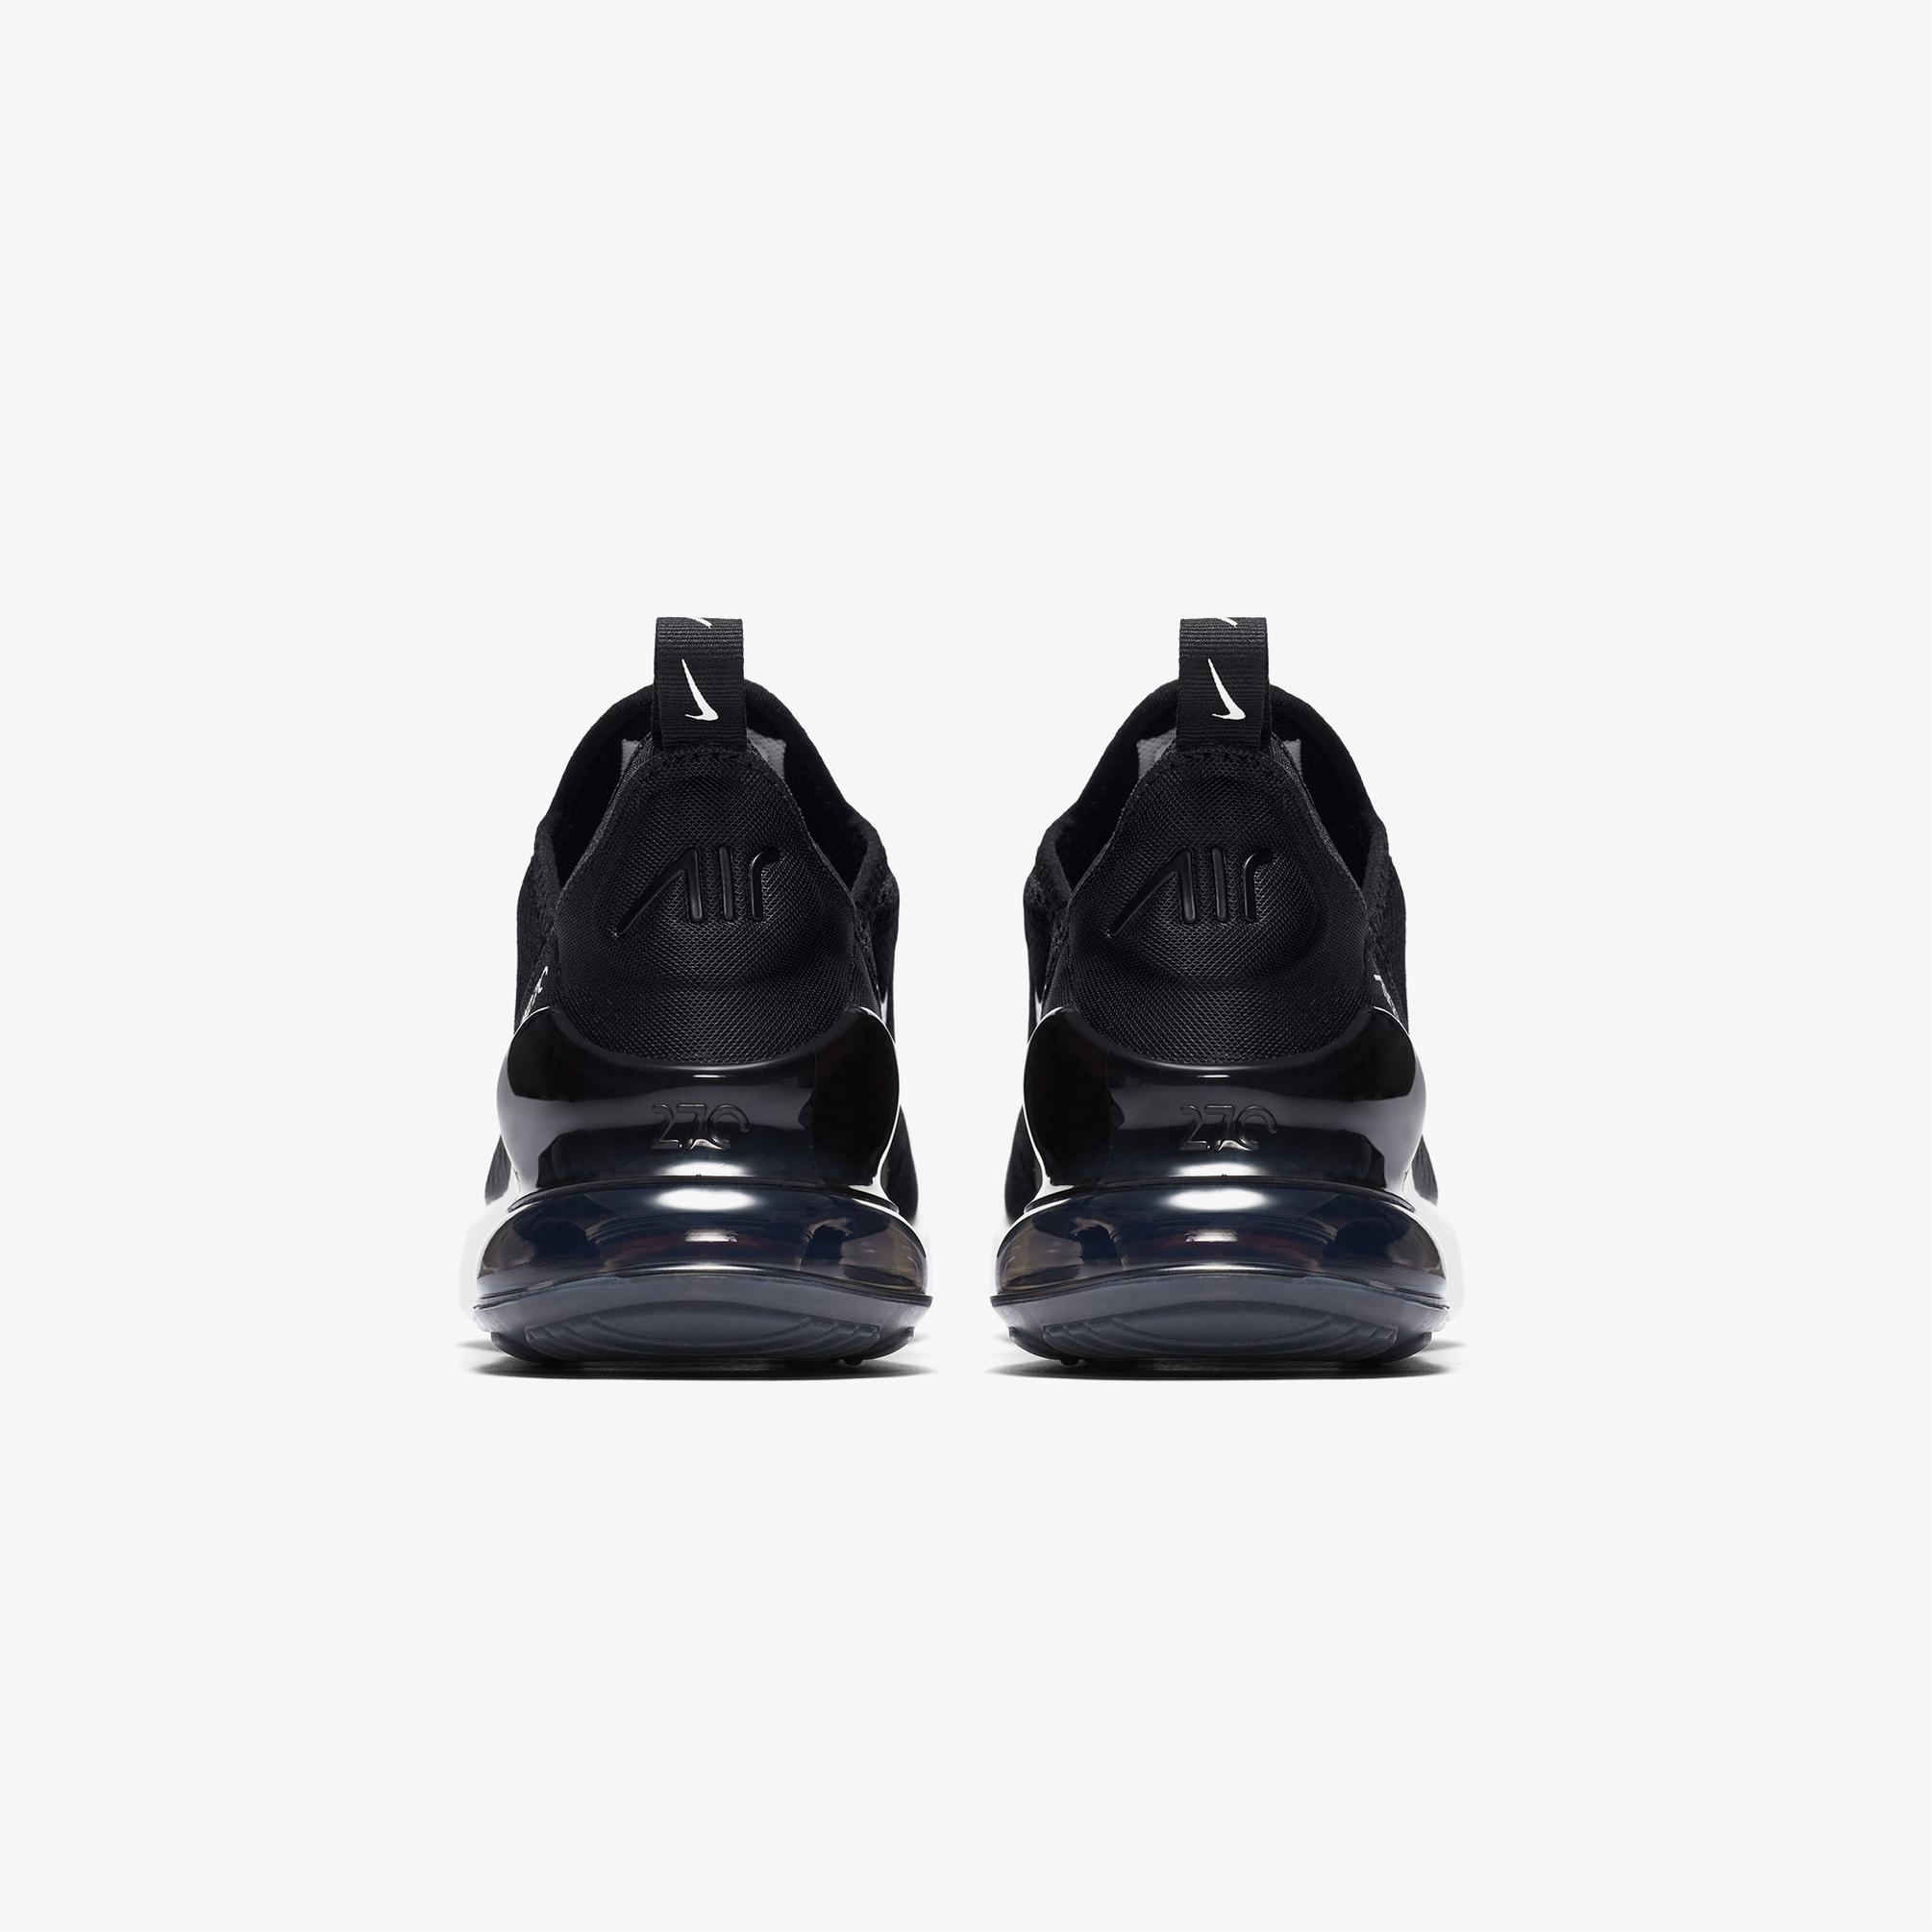  Nike Air Max 270 Siyah Kadın Spor Ayakkabı